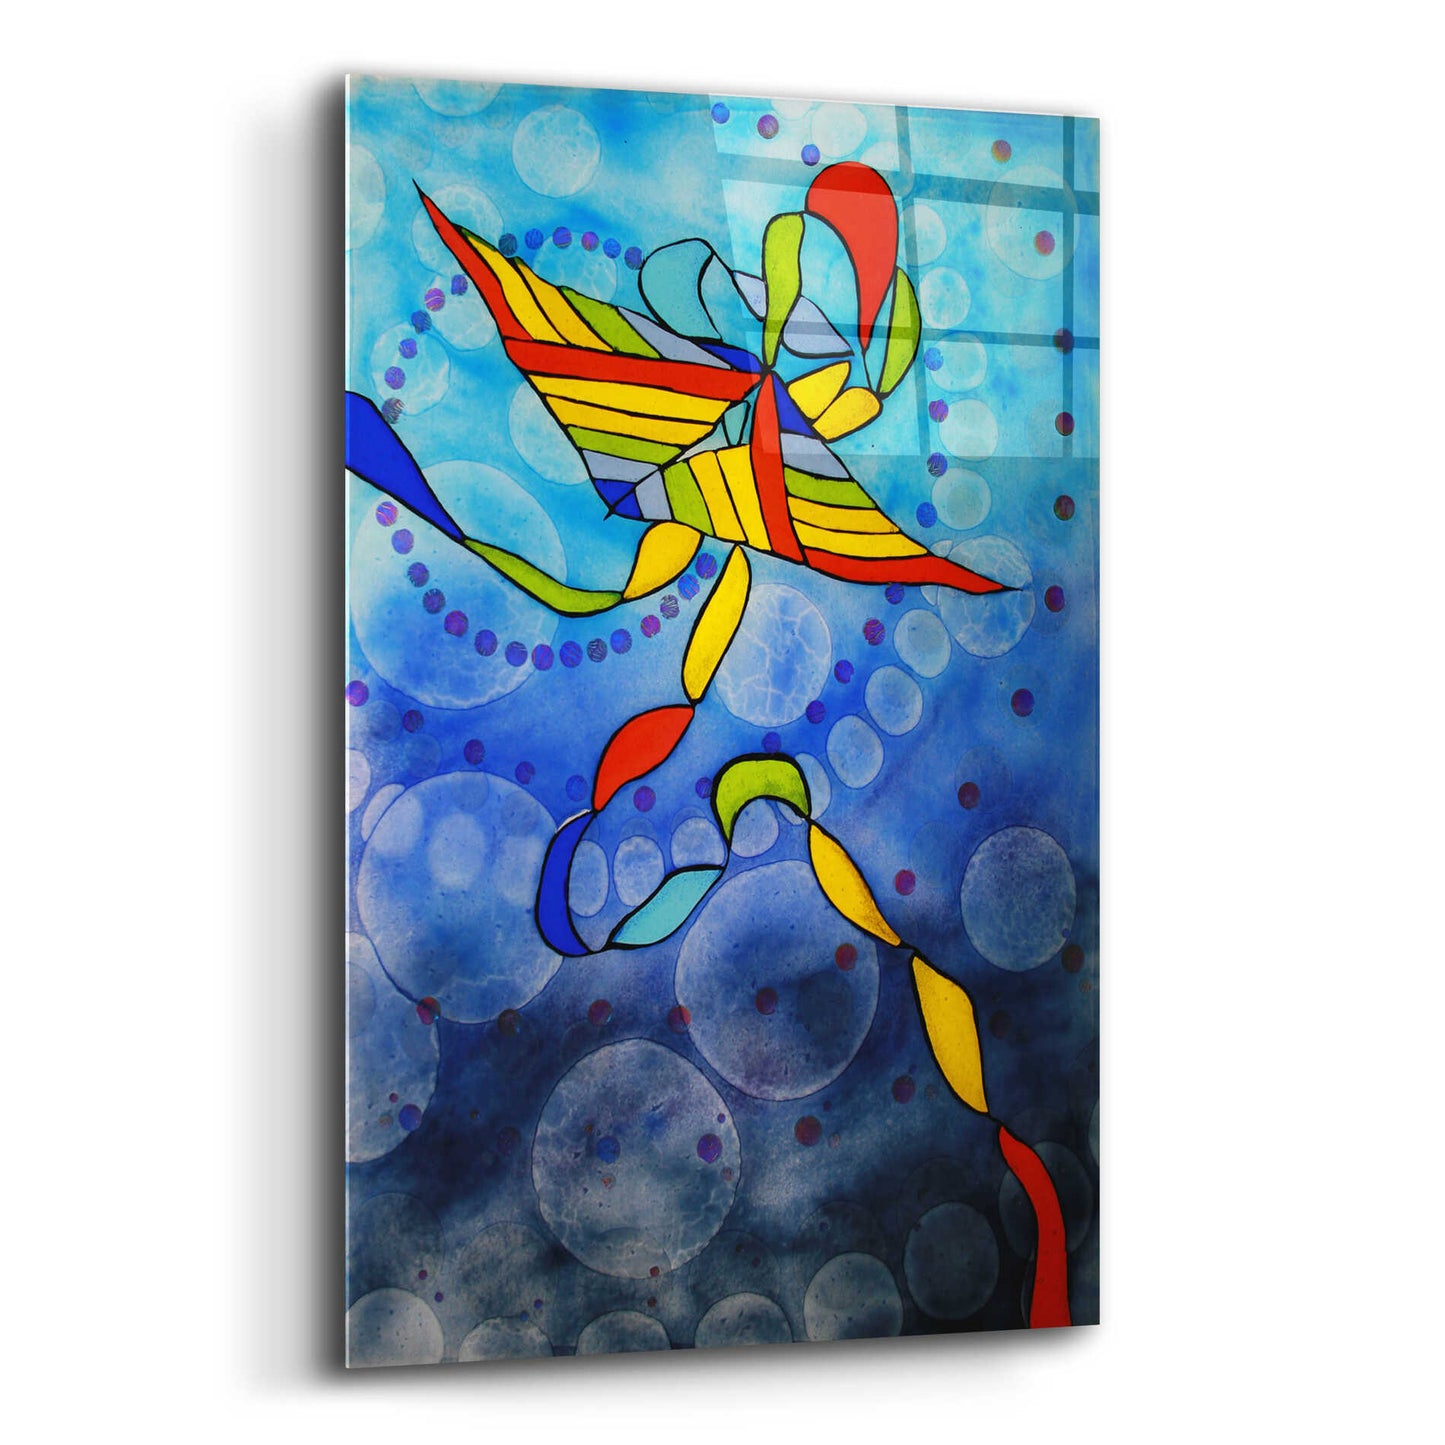 Epic Art 'Kite Transmitted' by Rita Shimelfarb, Acrylic Glass Wall Art,12x16